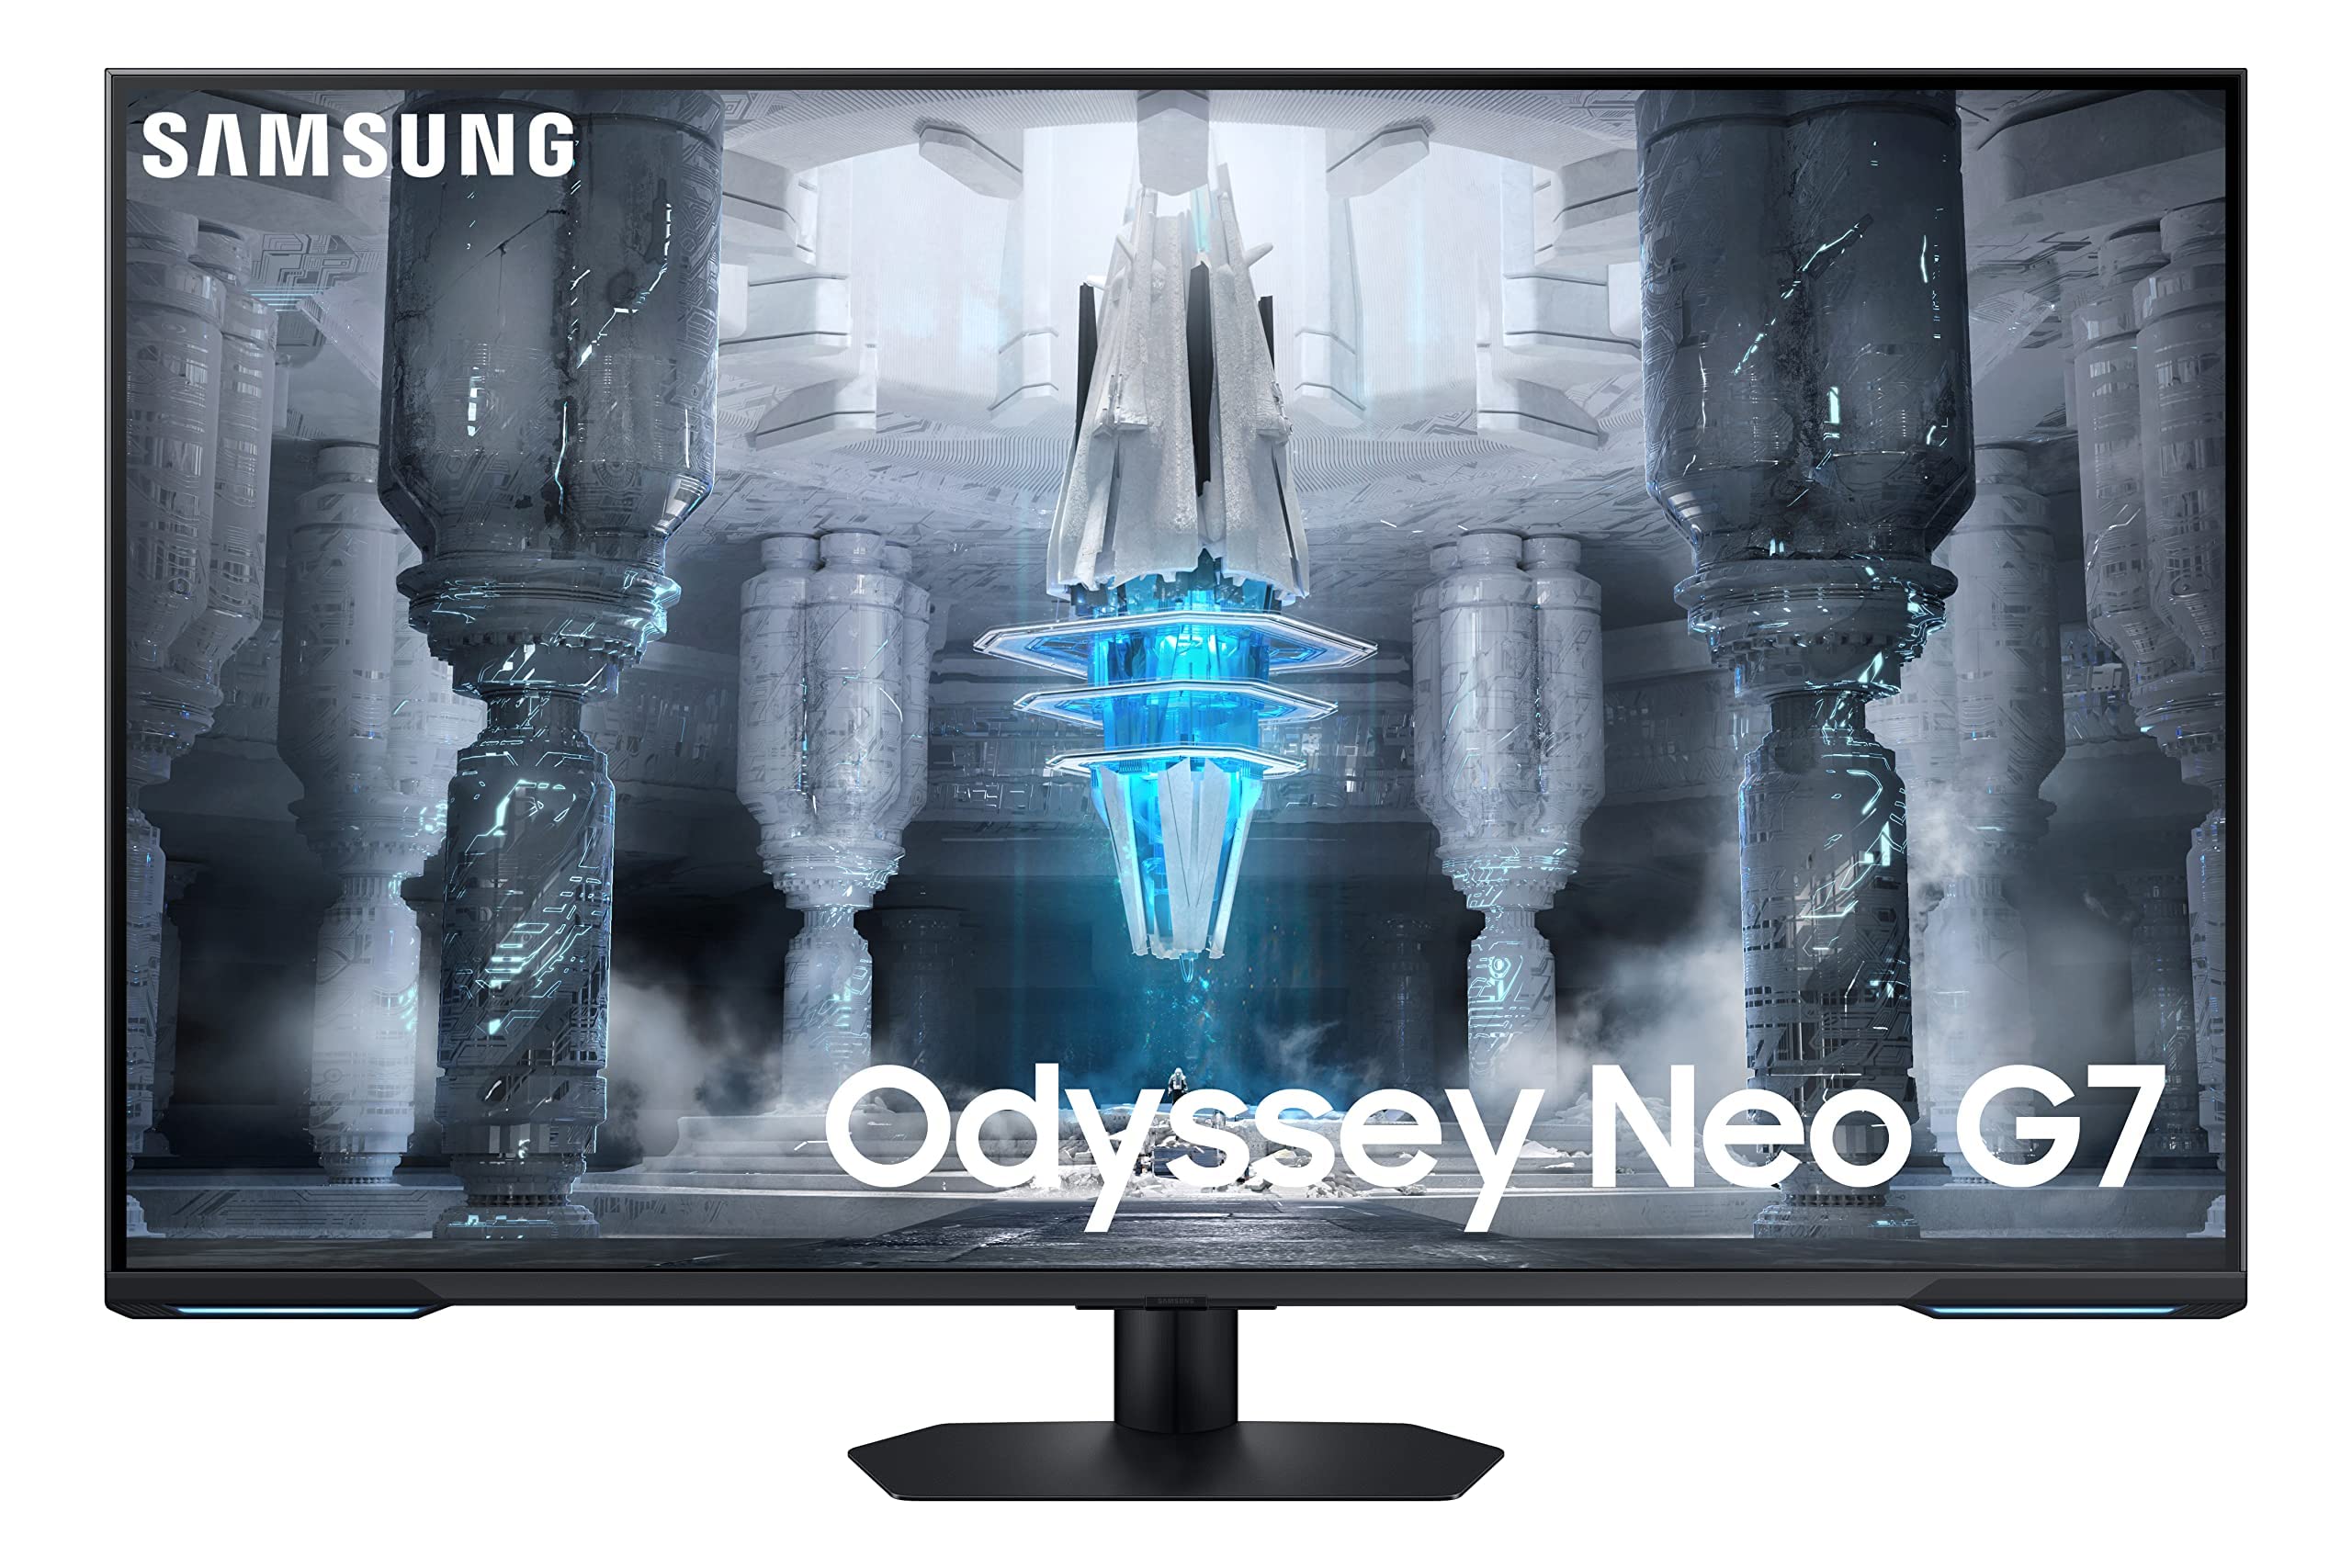 43" Samsung Odyssey Neo G7 4K HDR600 144Hz 1ms UHD Smart Gaming Monitor $500 + Free Shipping